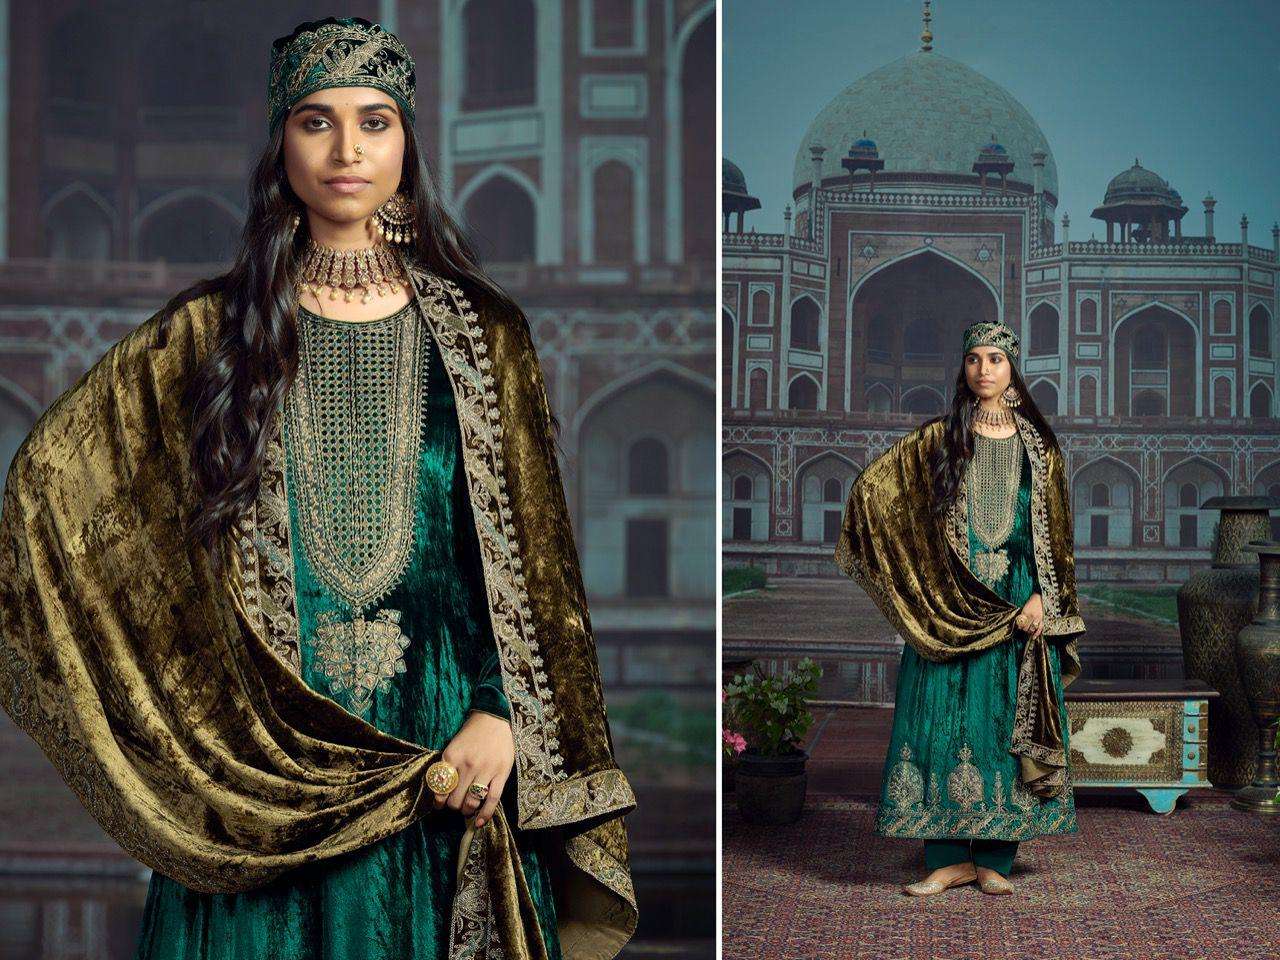 aiqa lifestyle salaam-e-ishq 224-231 series fancy velvet salwar suits collection surat